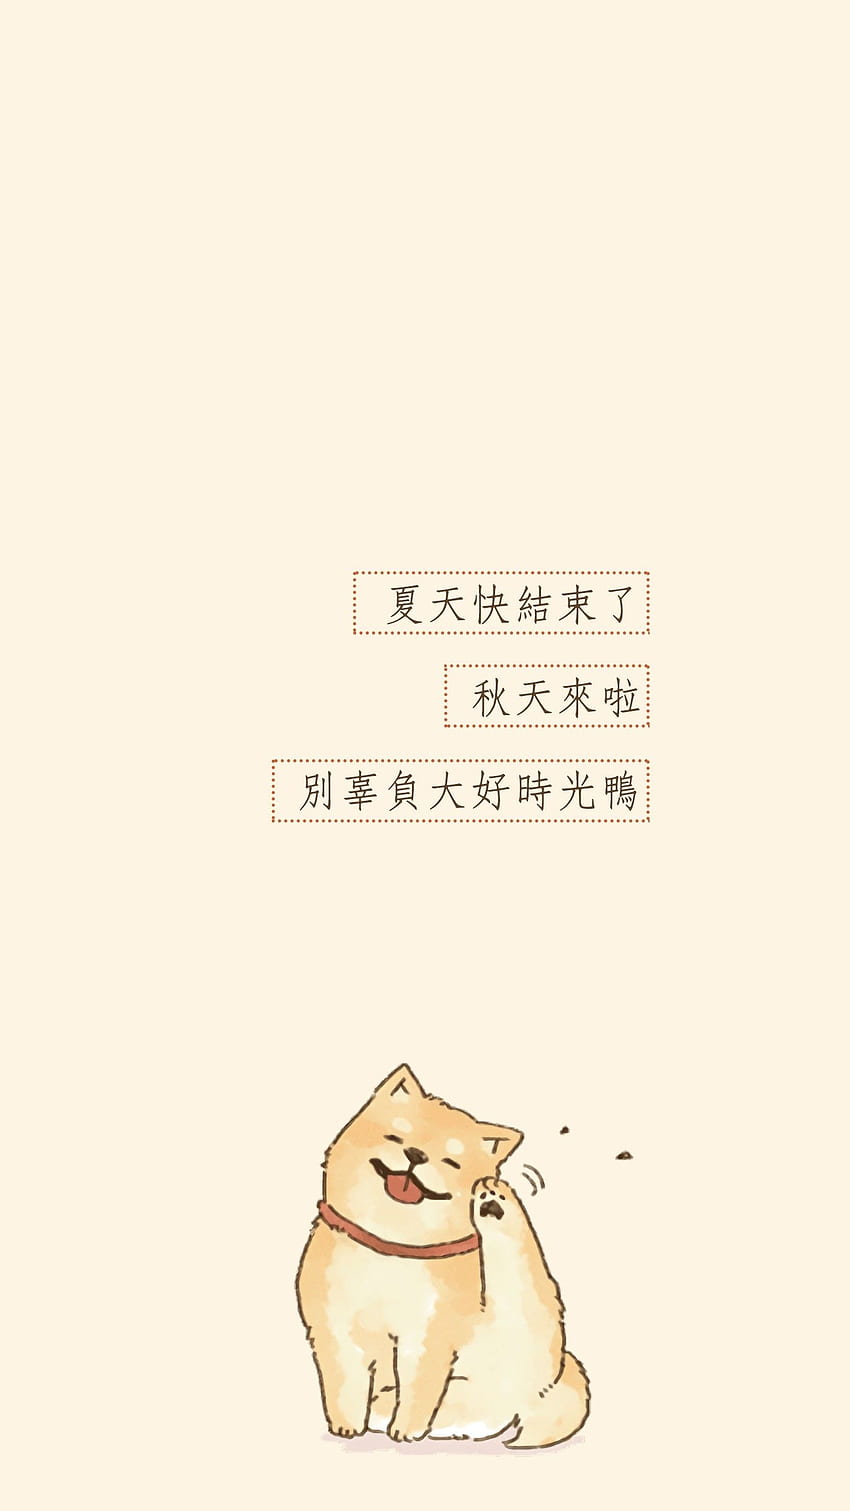 Ҿ ⒹⓄⓃ'Ⓣ ⒽⒶⓋⒺ ⓄⓃⒺ? on Shiba Inus. Cute cartoon HD phone wallpaper